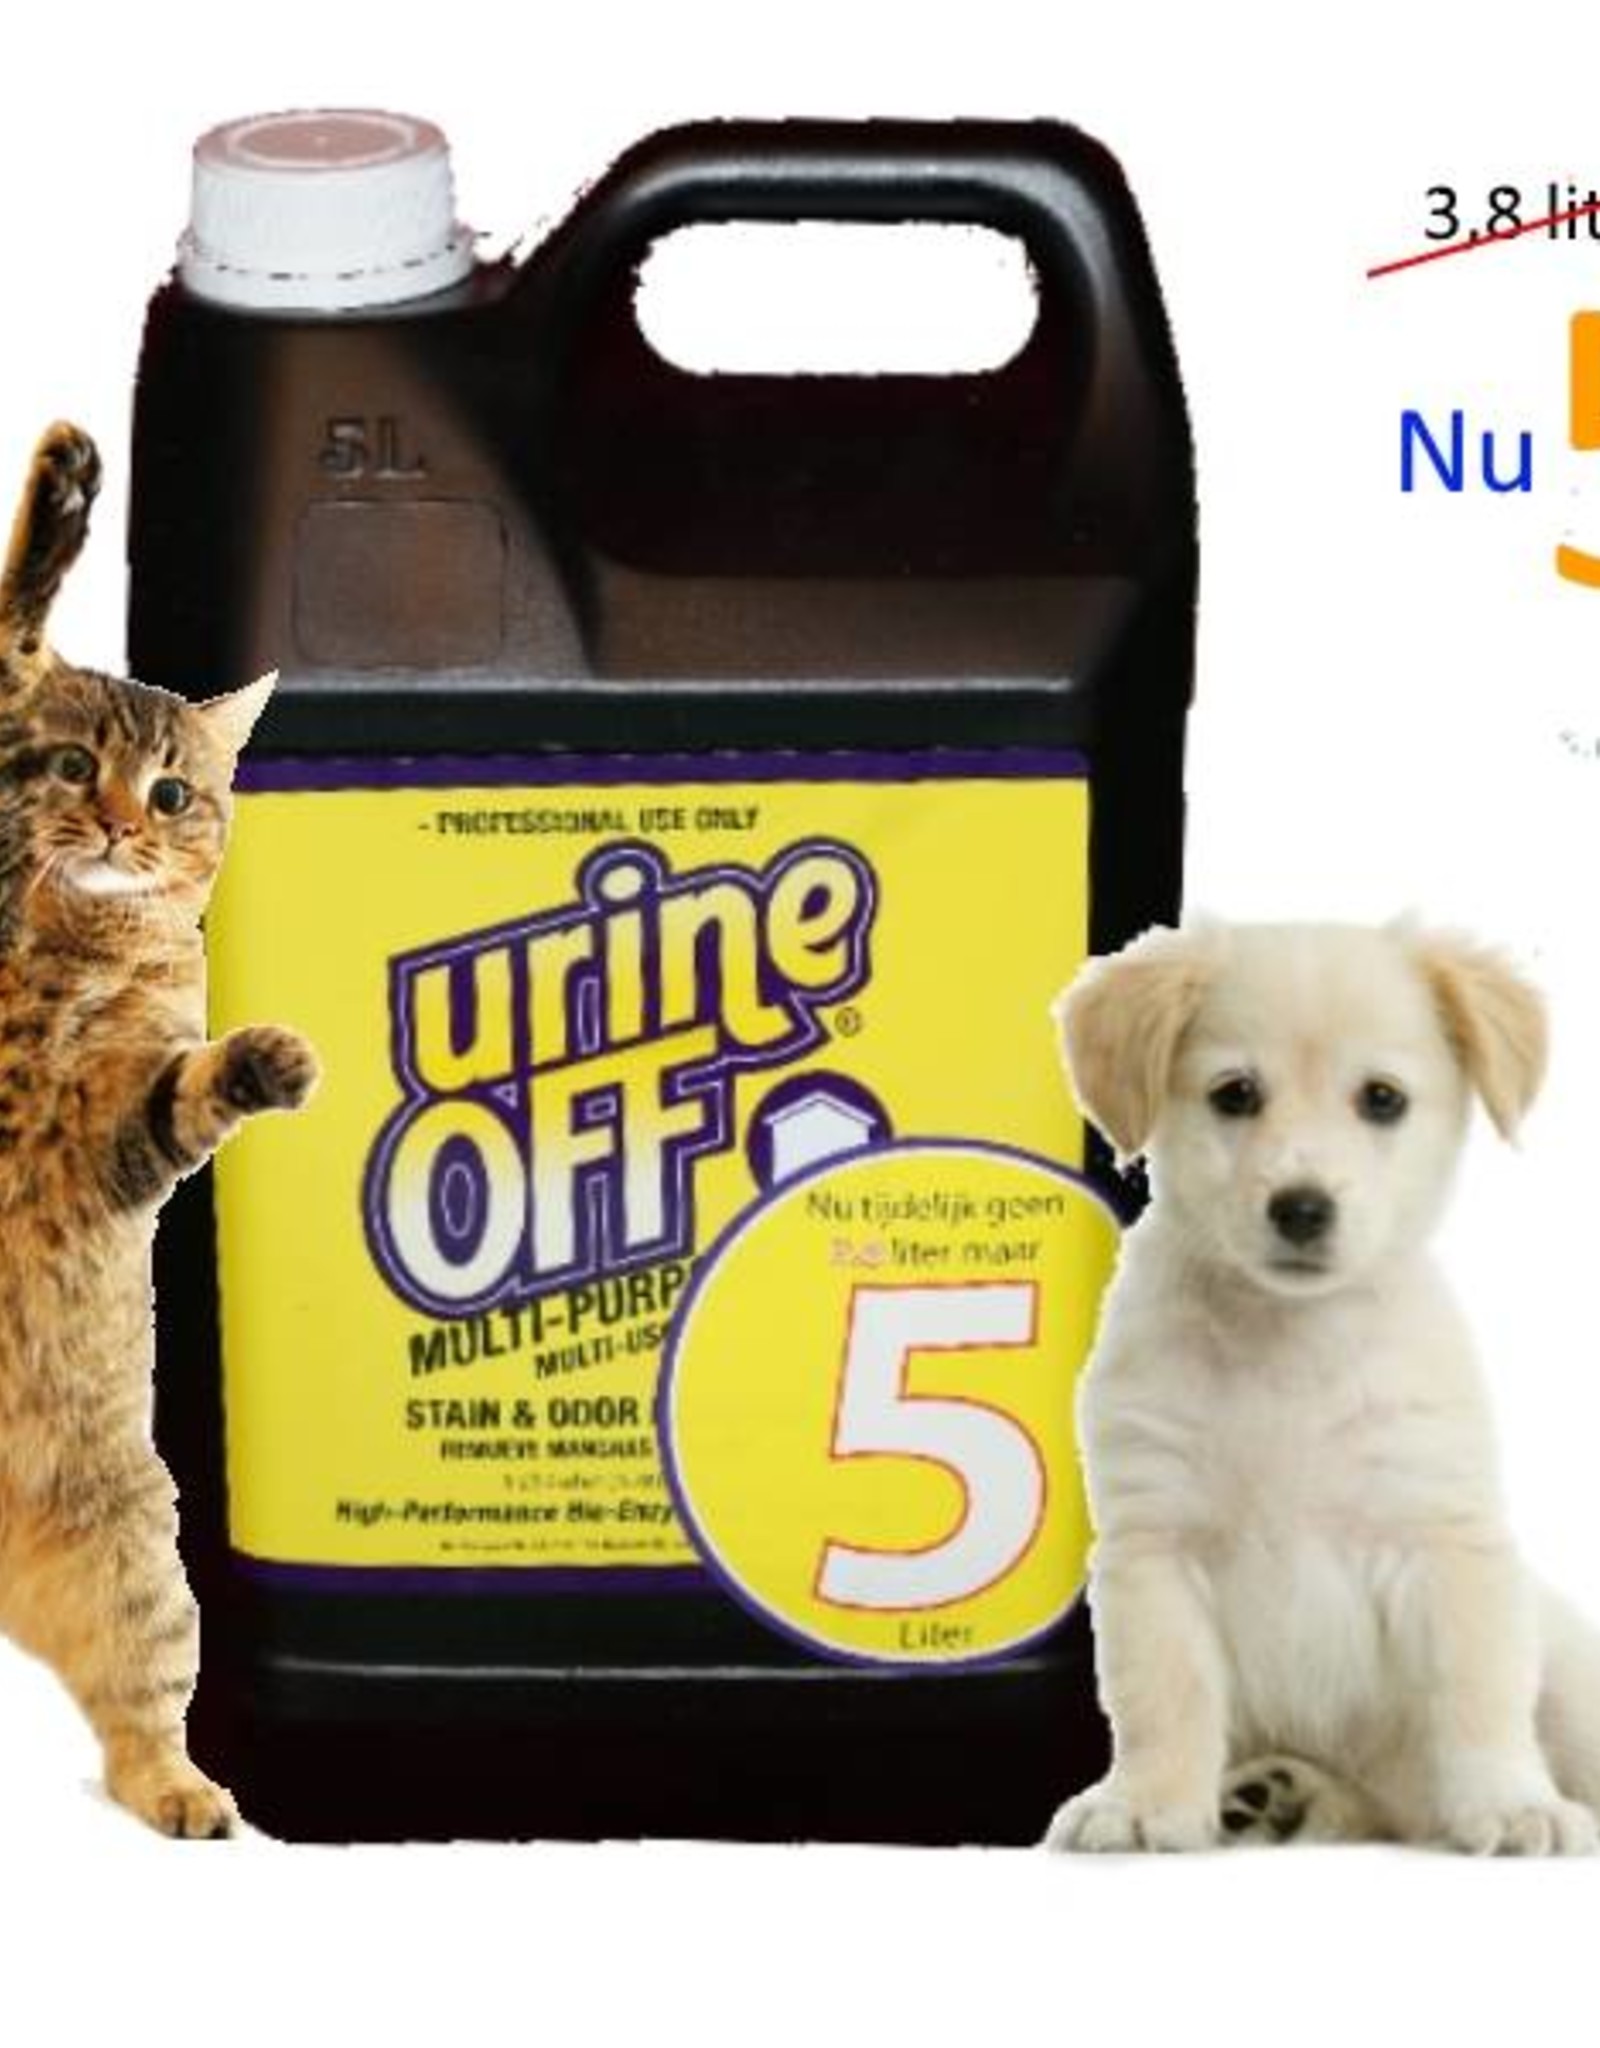 Urine Off Multi Purpose Urineoff L Odeur D Urine Et Detacheur D Urine Chien Et Chat 5 Litres